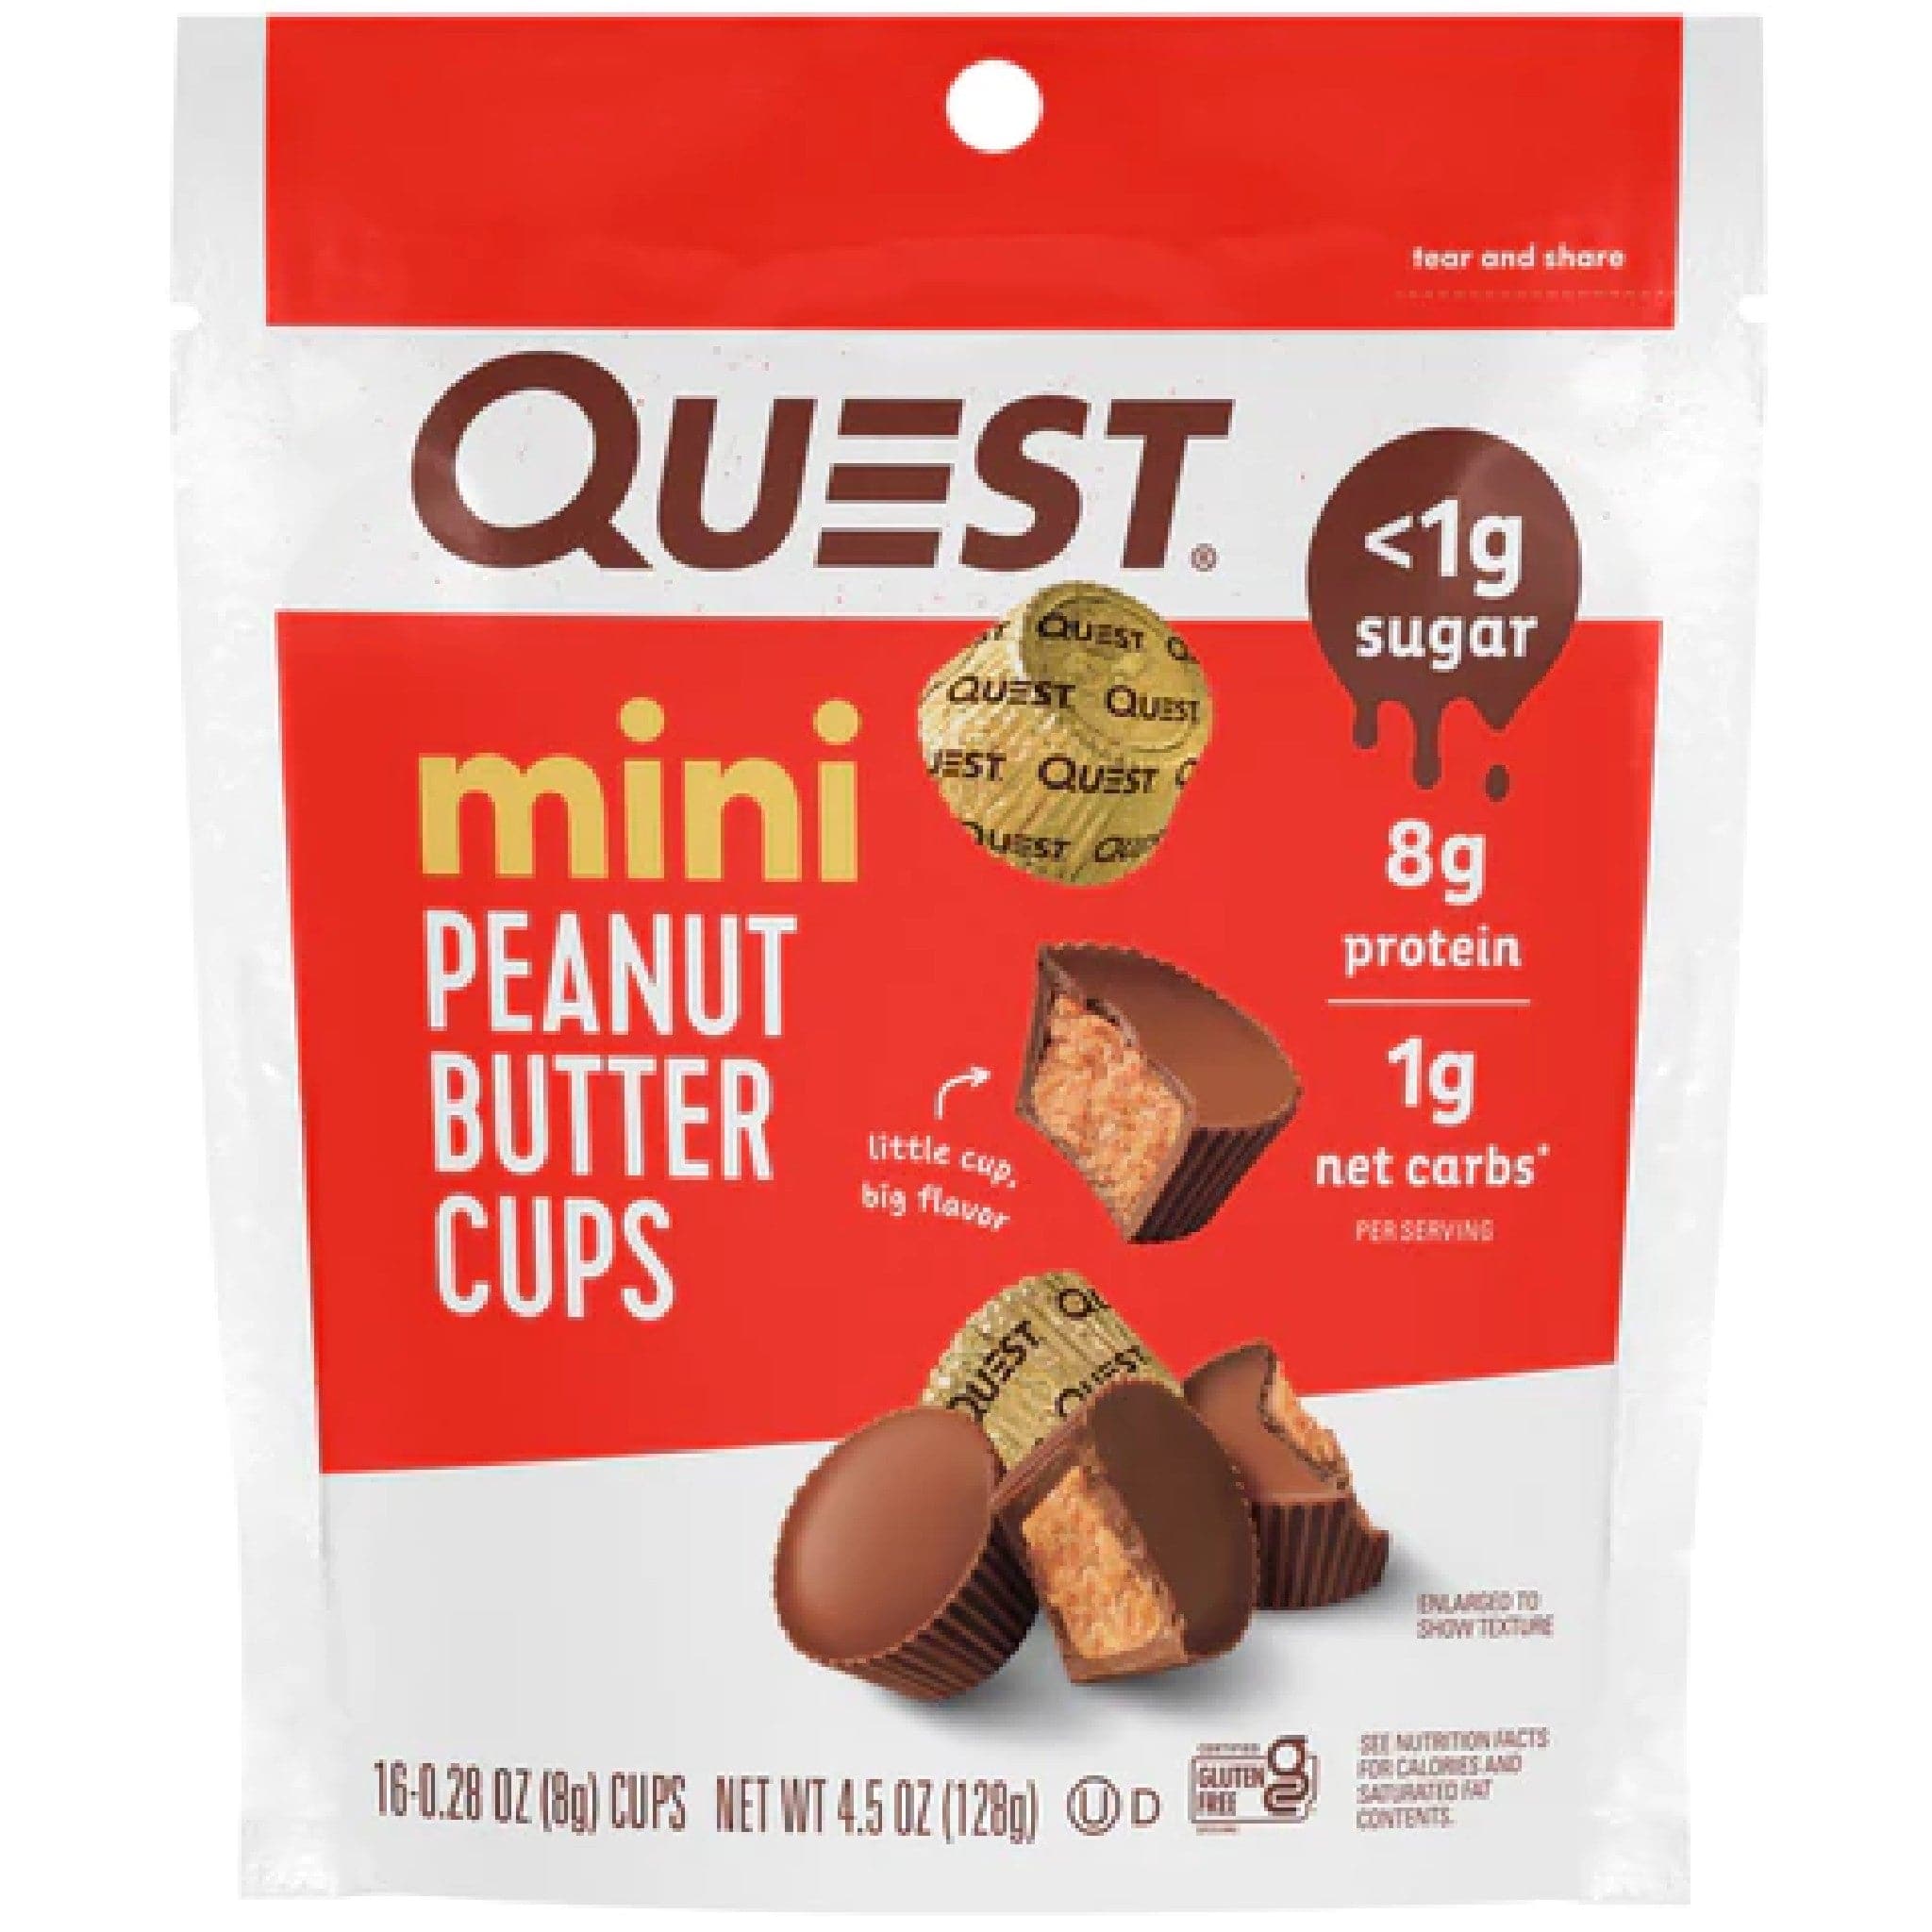 Quest Mini Peanut Butter Cup Bag